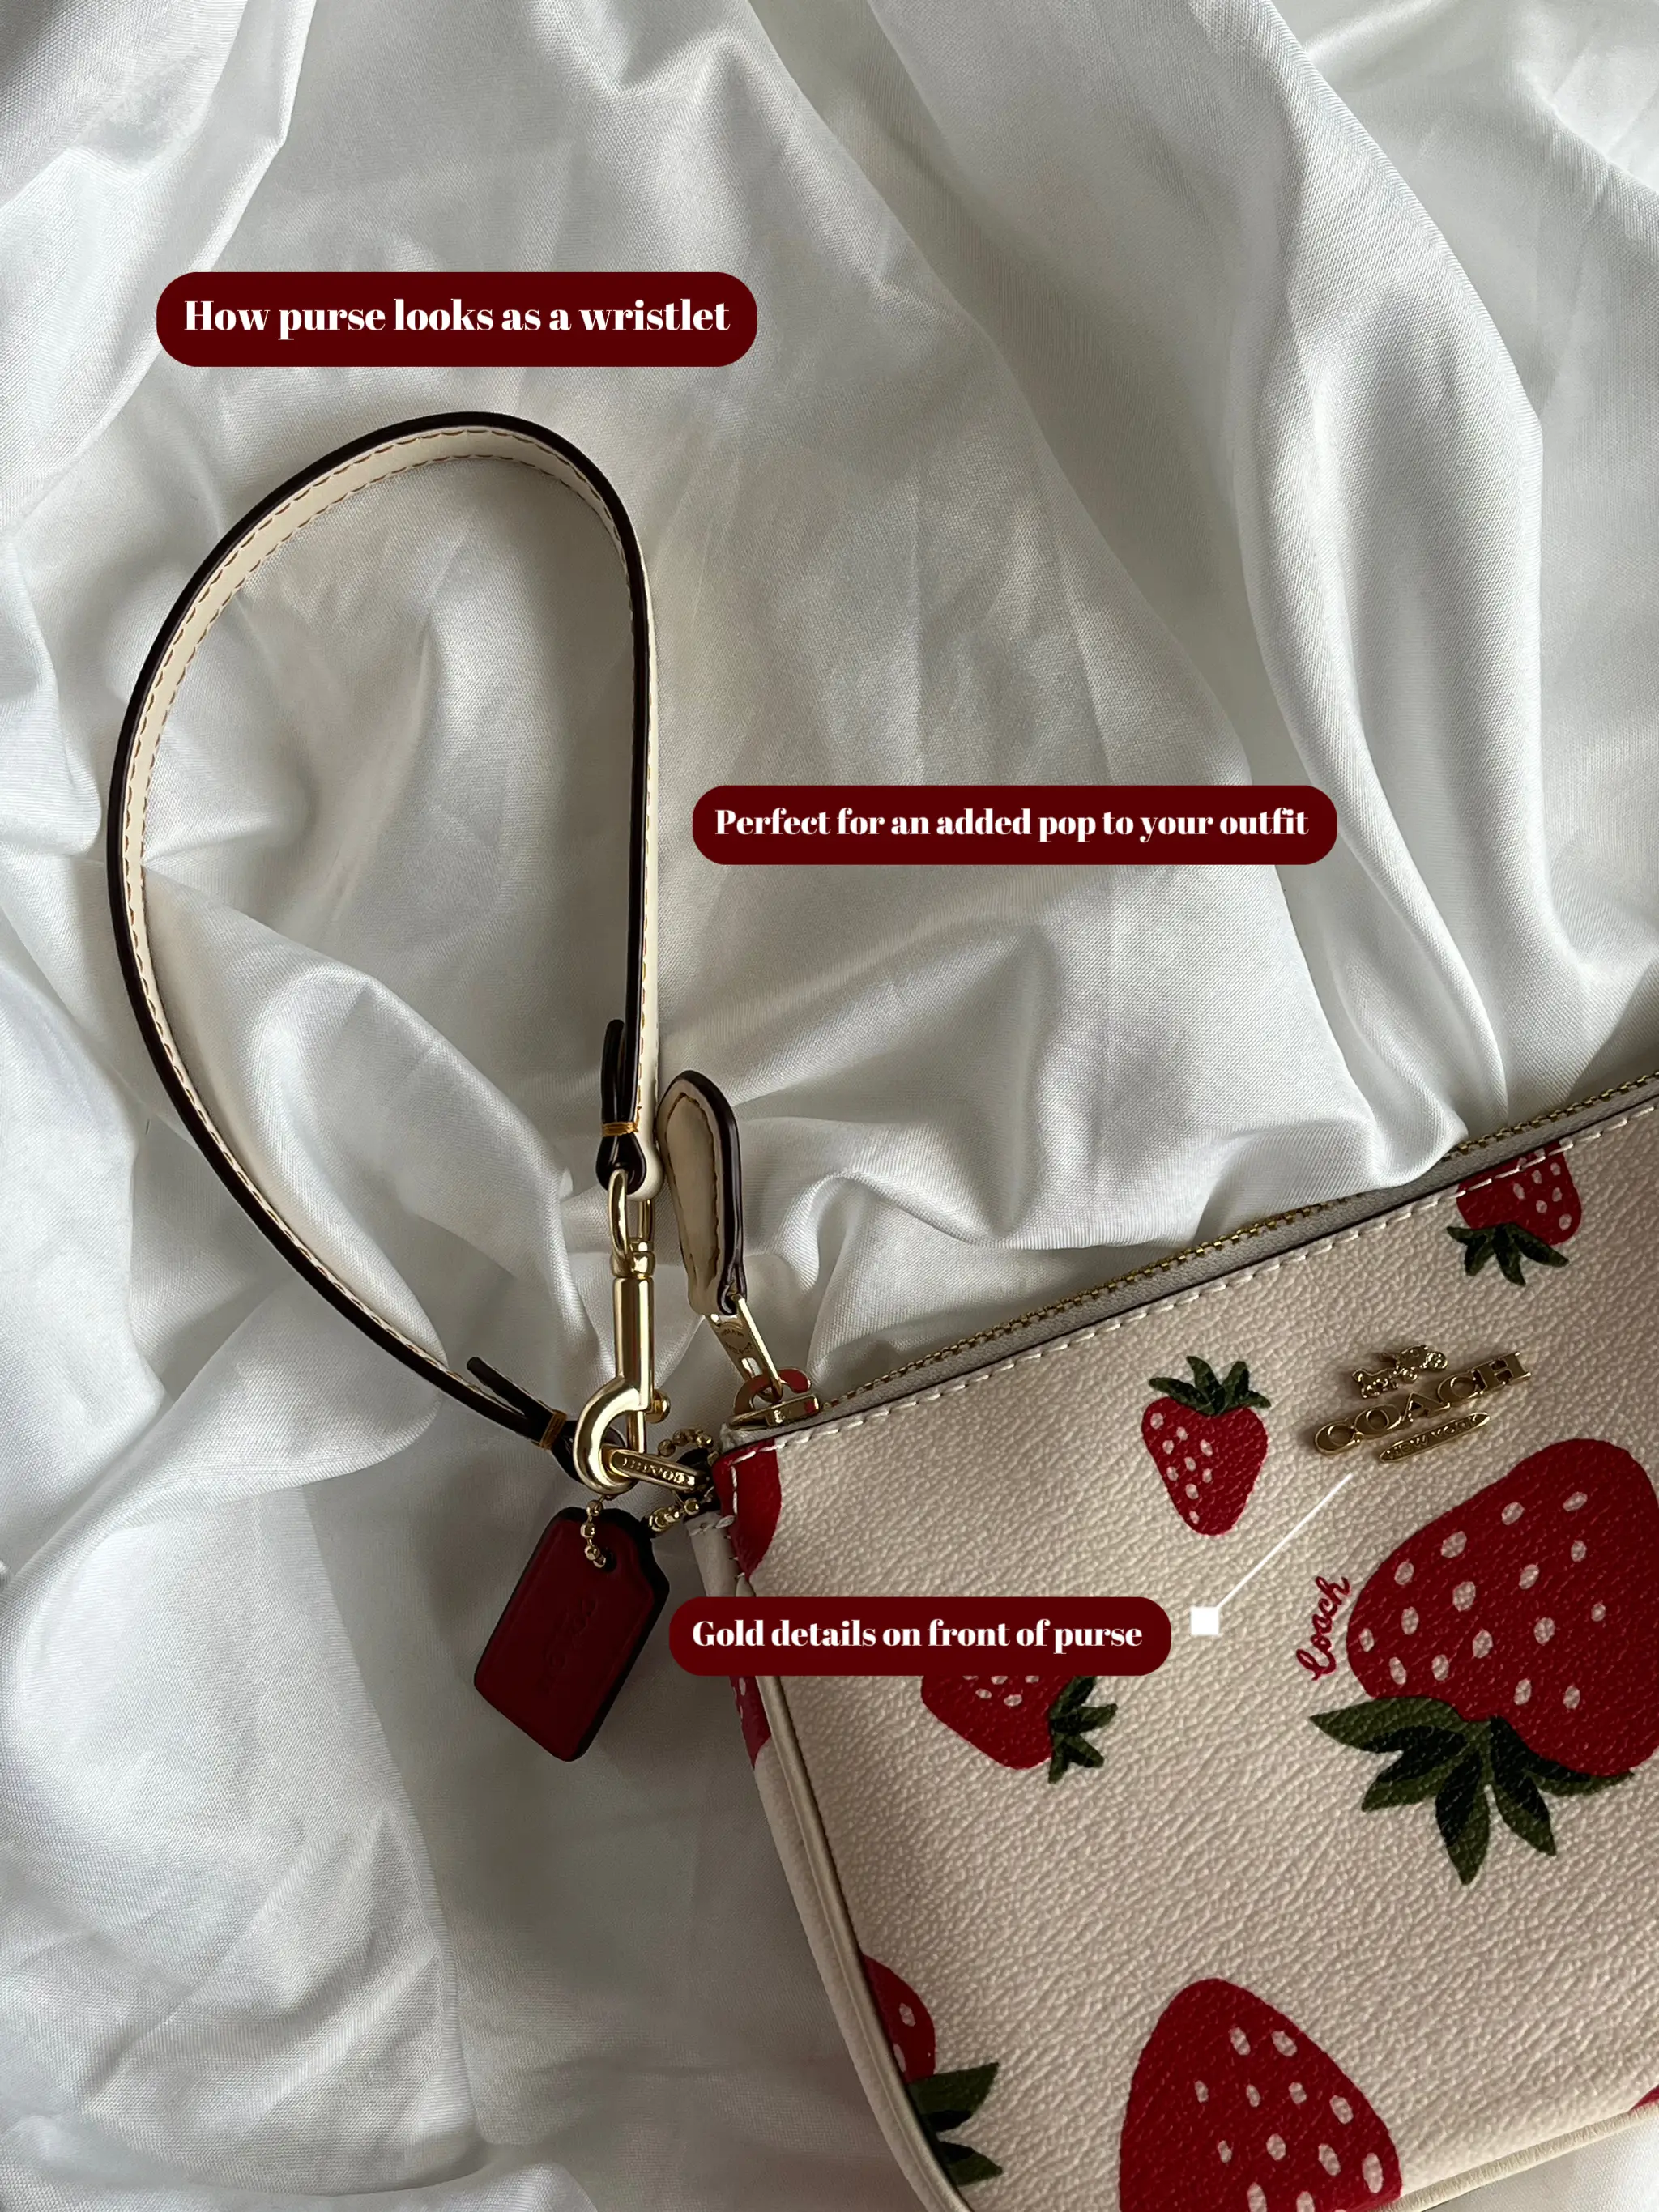 COACH Nolita 15 Wristlet Mini Bag Strawberry Pink Algeria